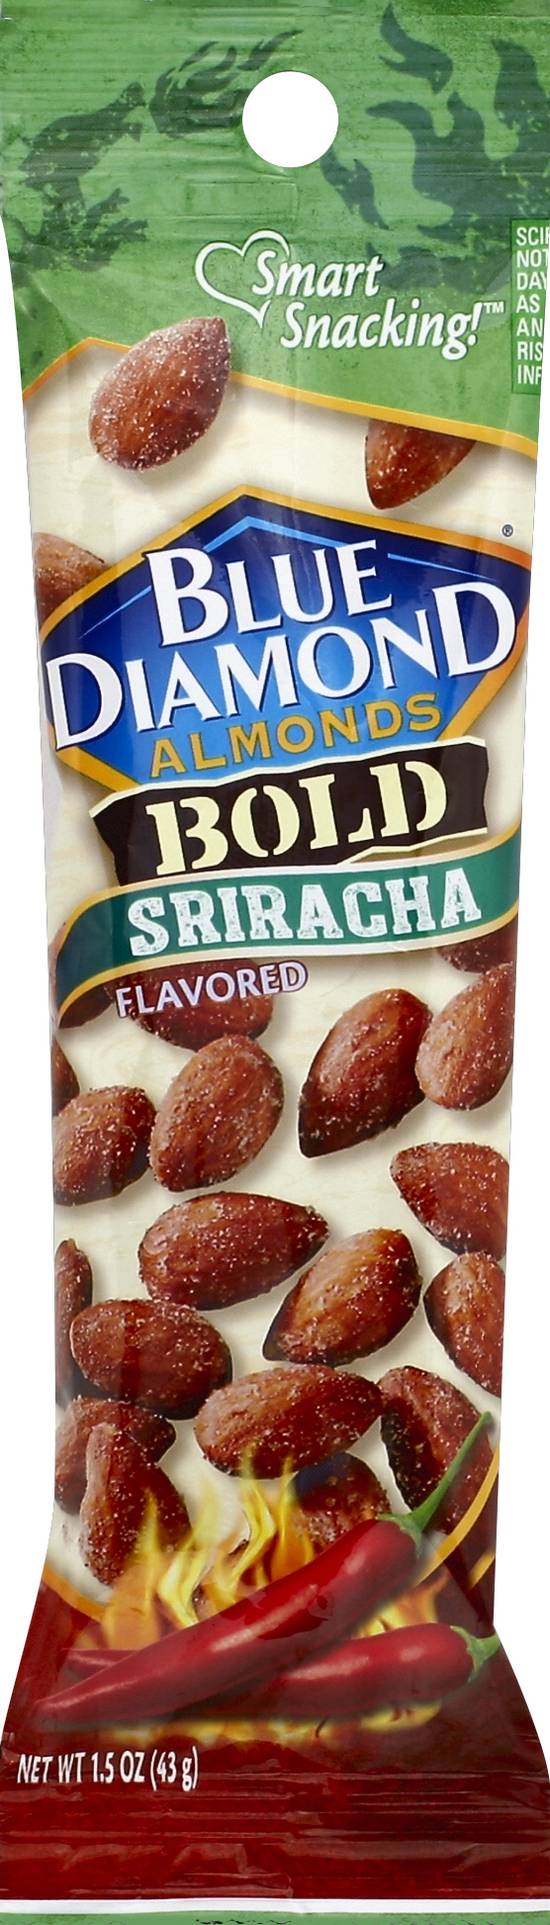 Blue Diamond Bold Sriracha Flavored Almonds (1.5 oz)